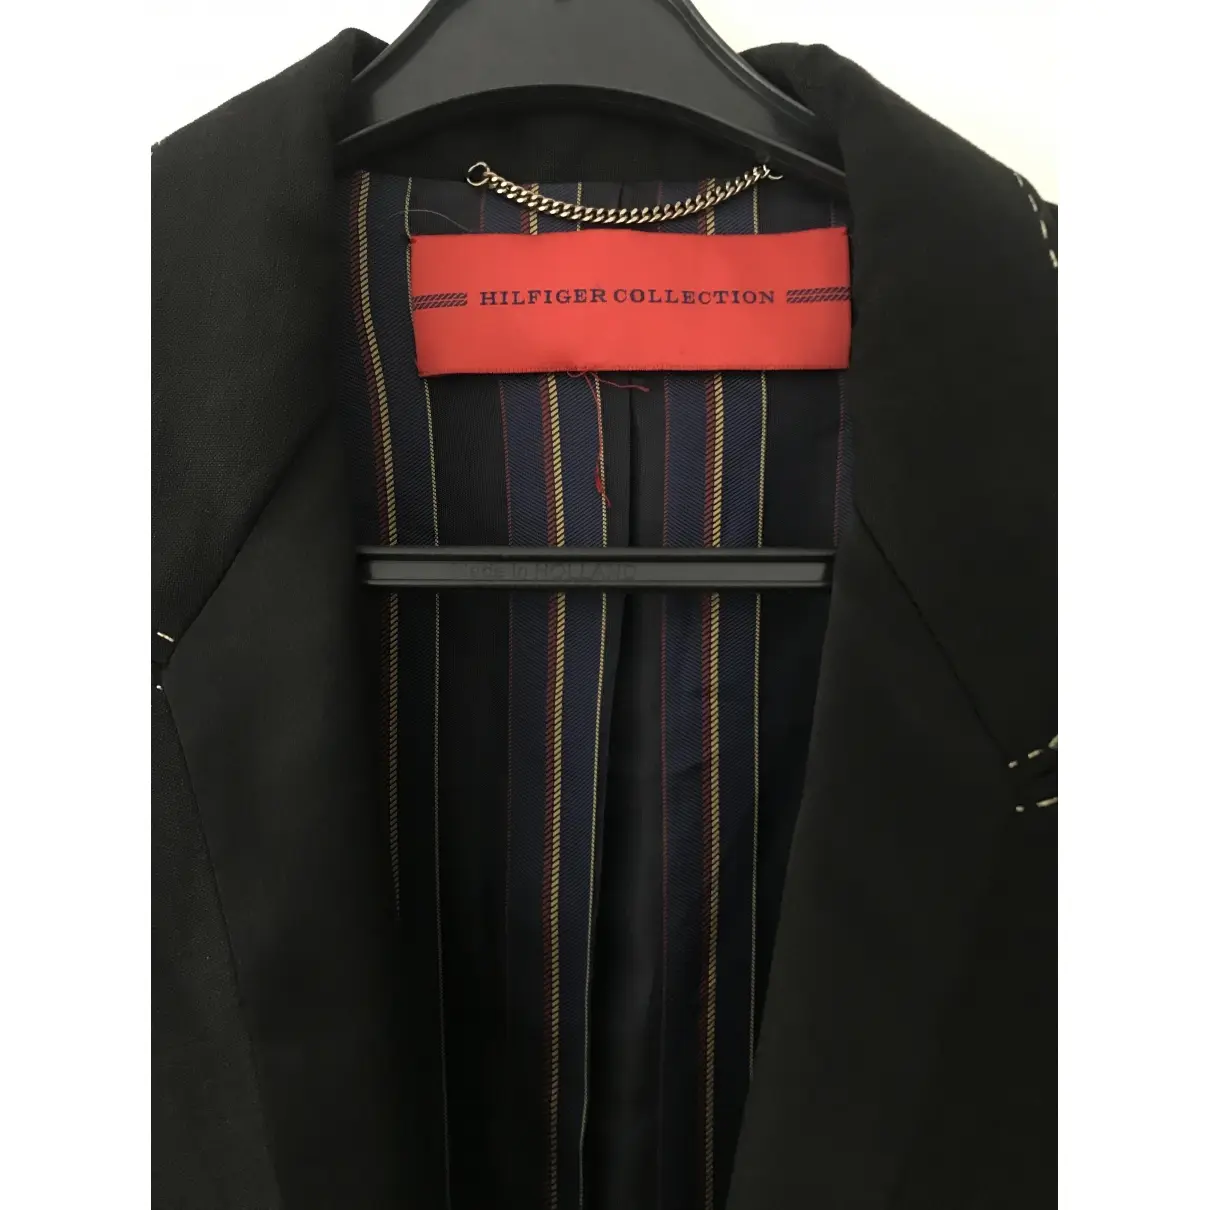 Buy Hilfiger Collection Black Cotton Jacket online